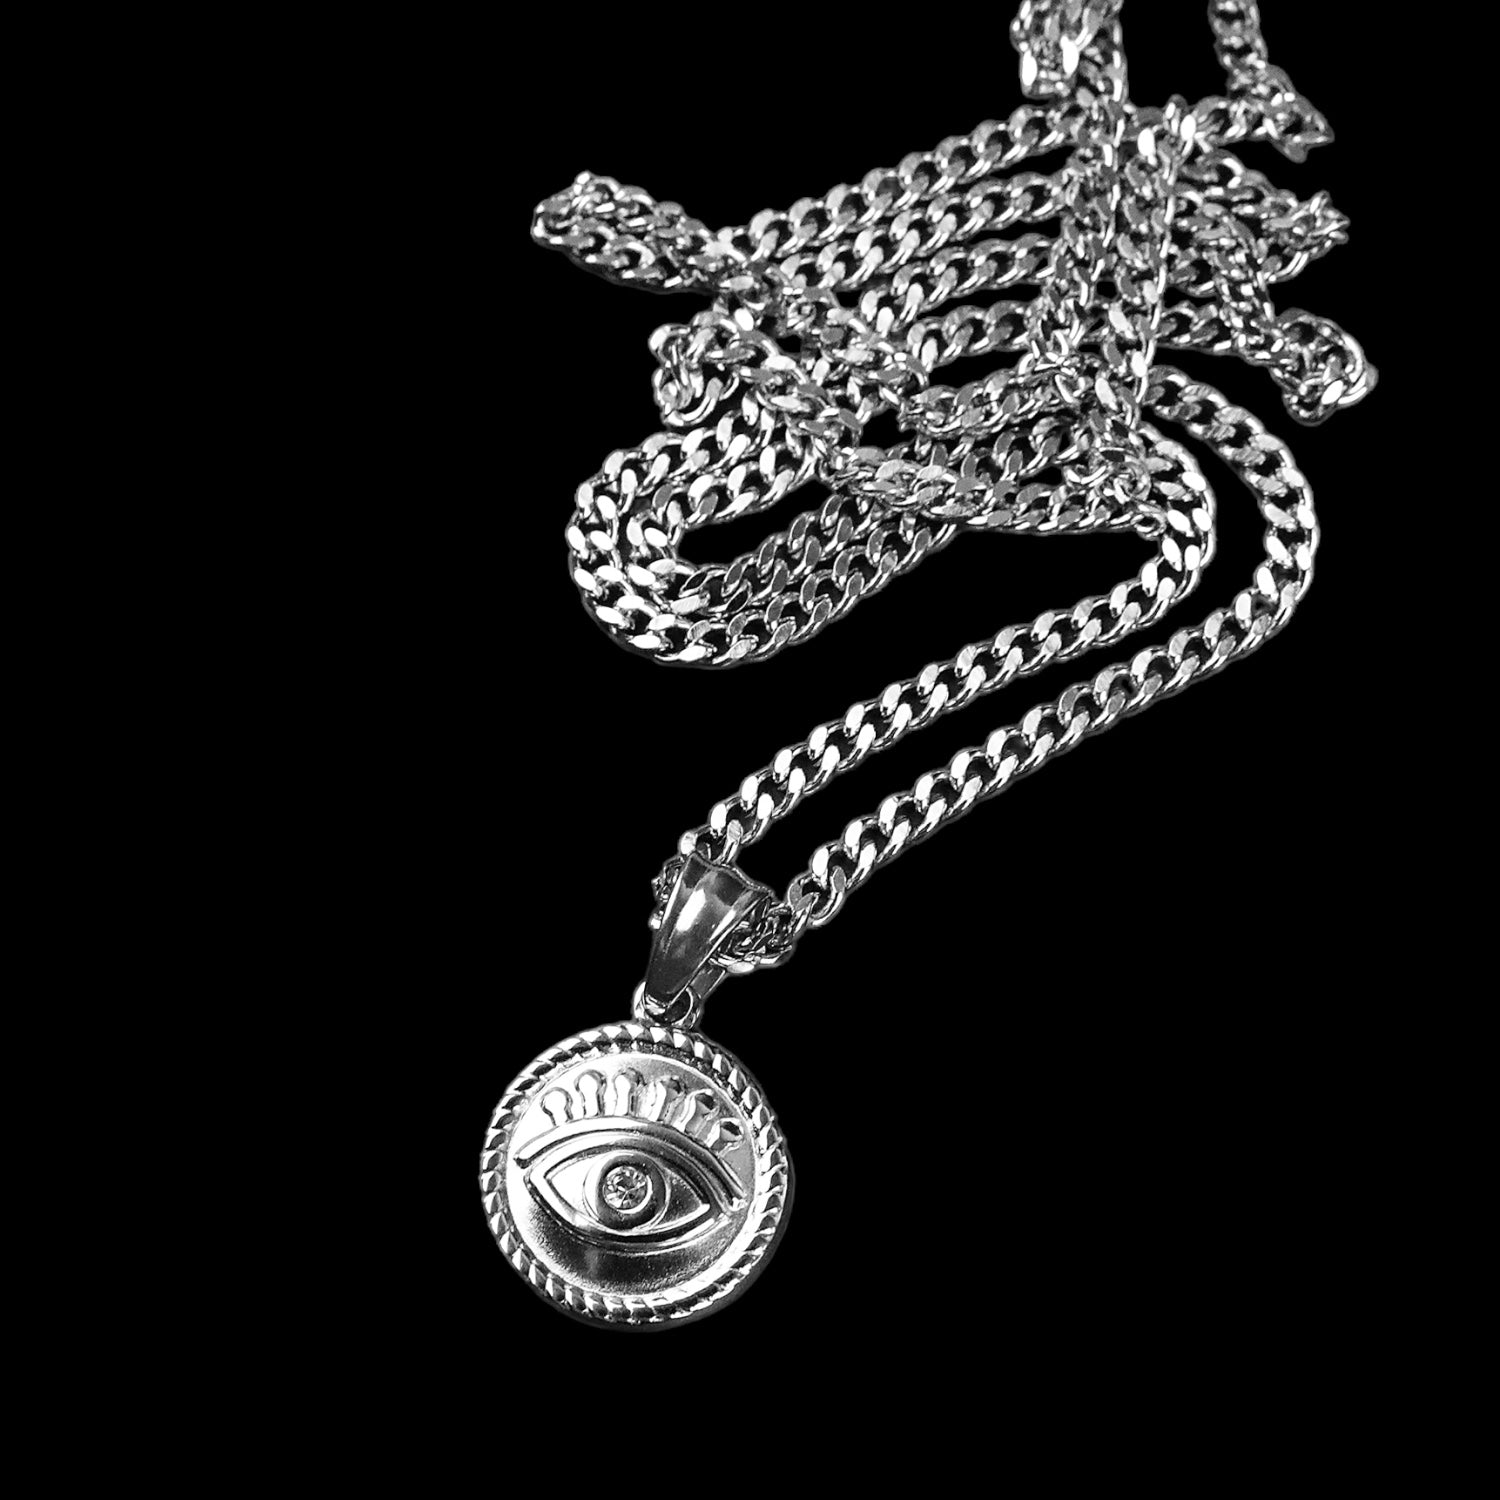 CENWA Magic Amulet Protection Talisman Jewelry Powerful Talisman Pendant  Necklace Religious Protection Saint Jewelry, Metal, No Gemstone :  Amazon.co.uk: Fashion